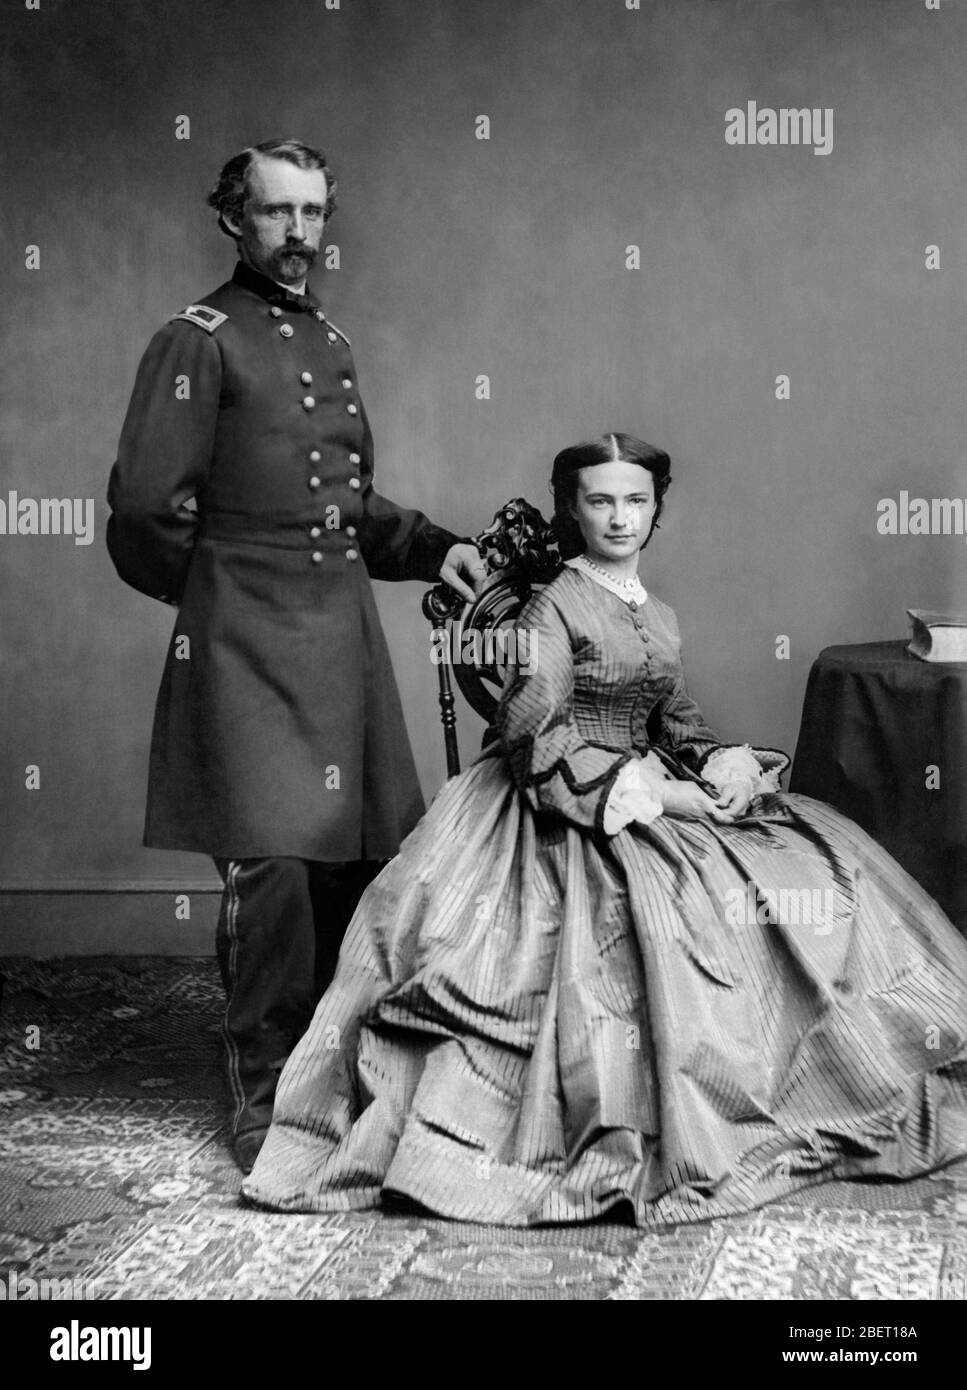 George Armstrong Custer e Elizabeth Bacon Custer durante la guerra civile. Foto Stock